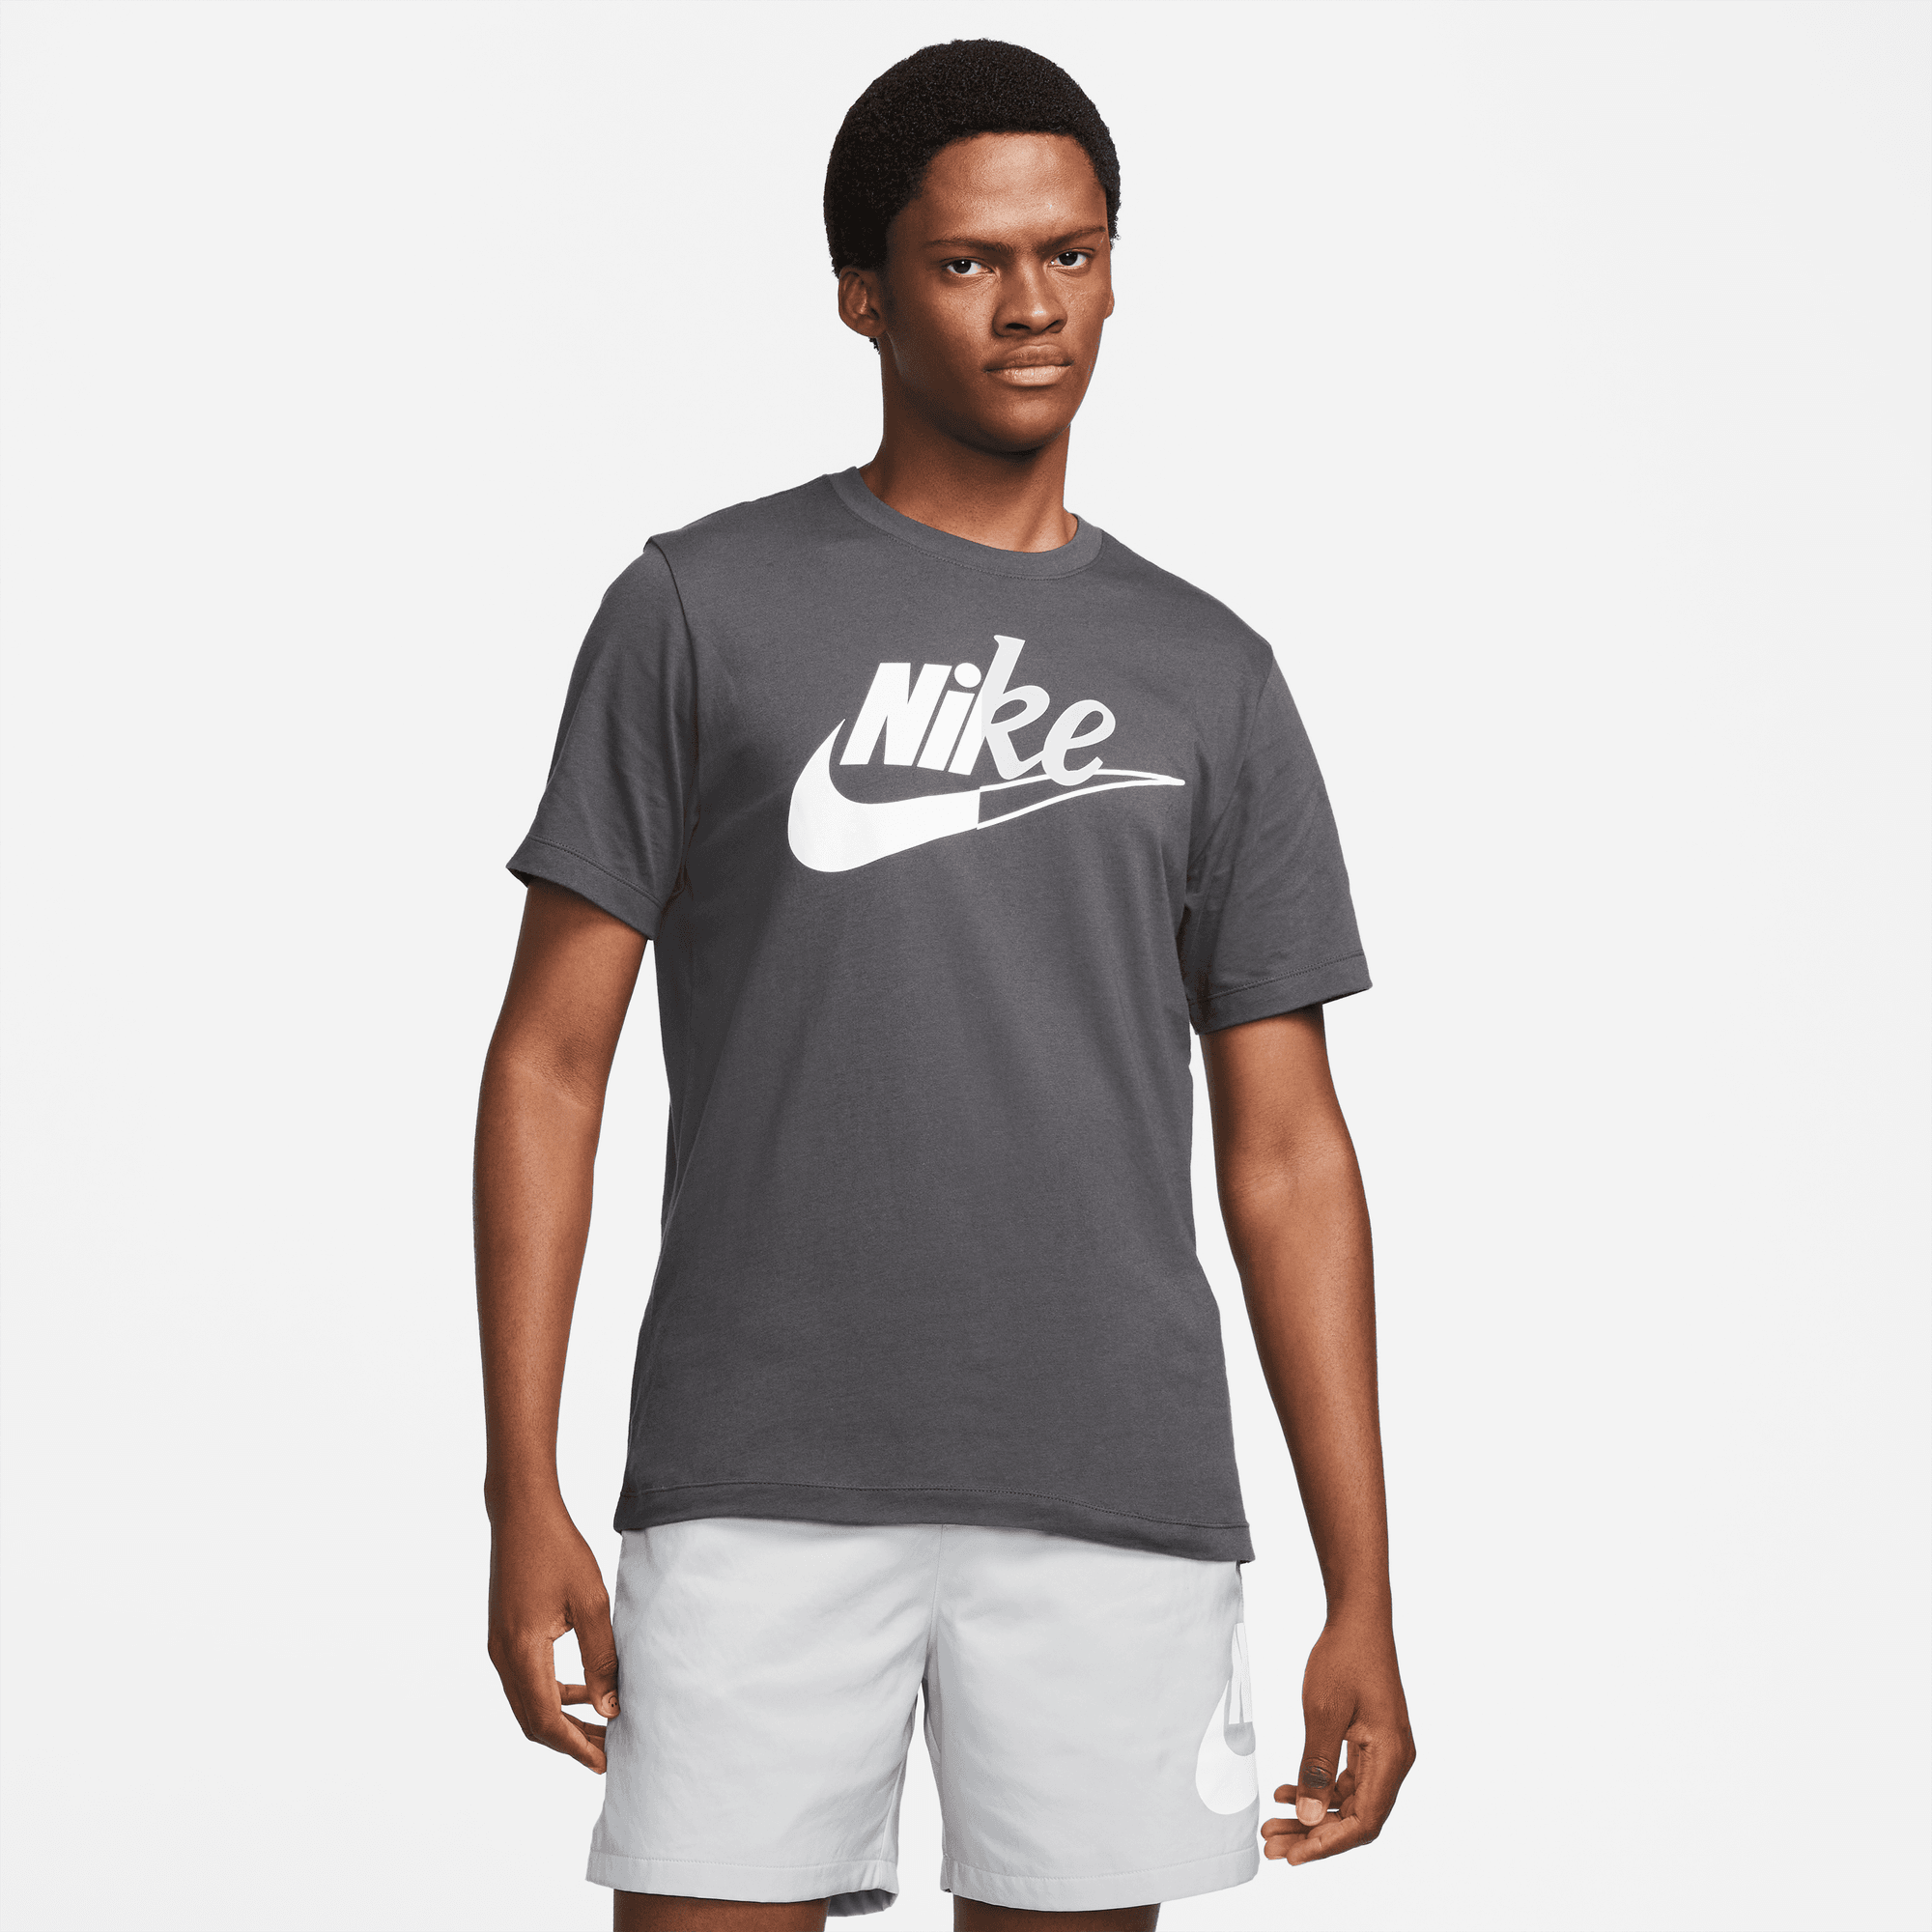 Polera Nike Color Plomo